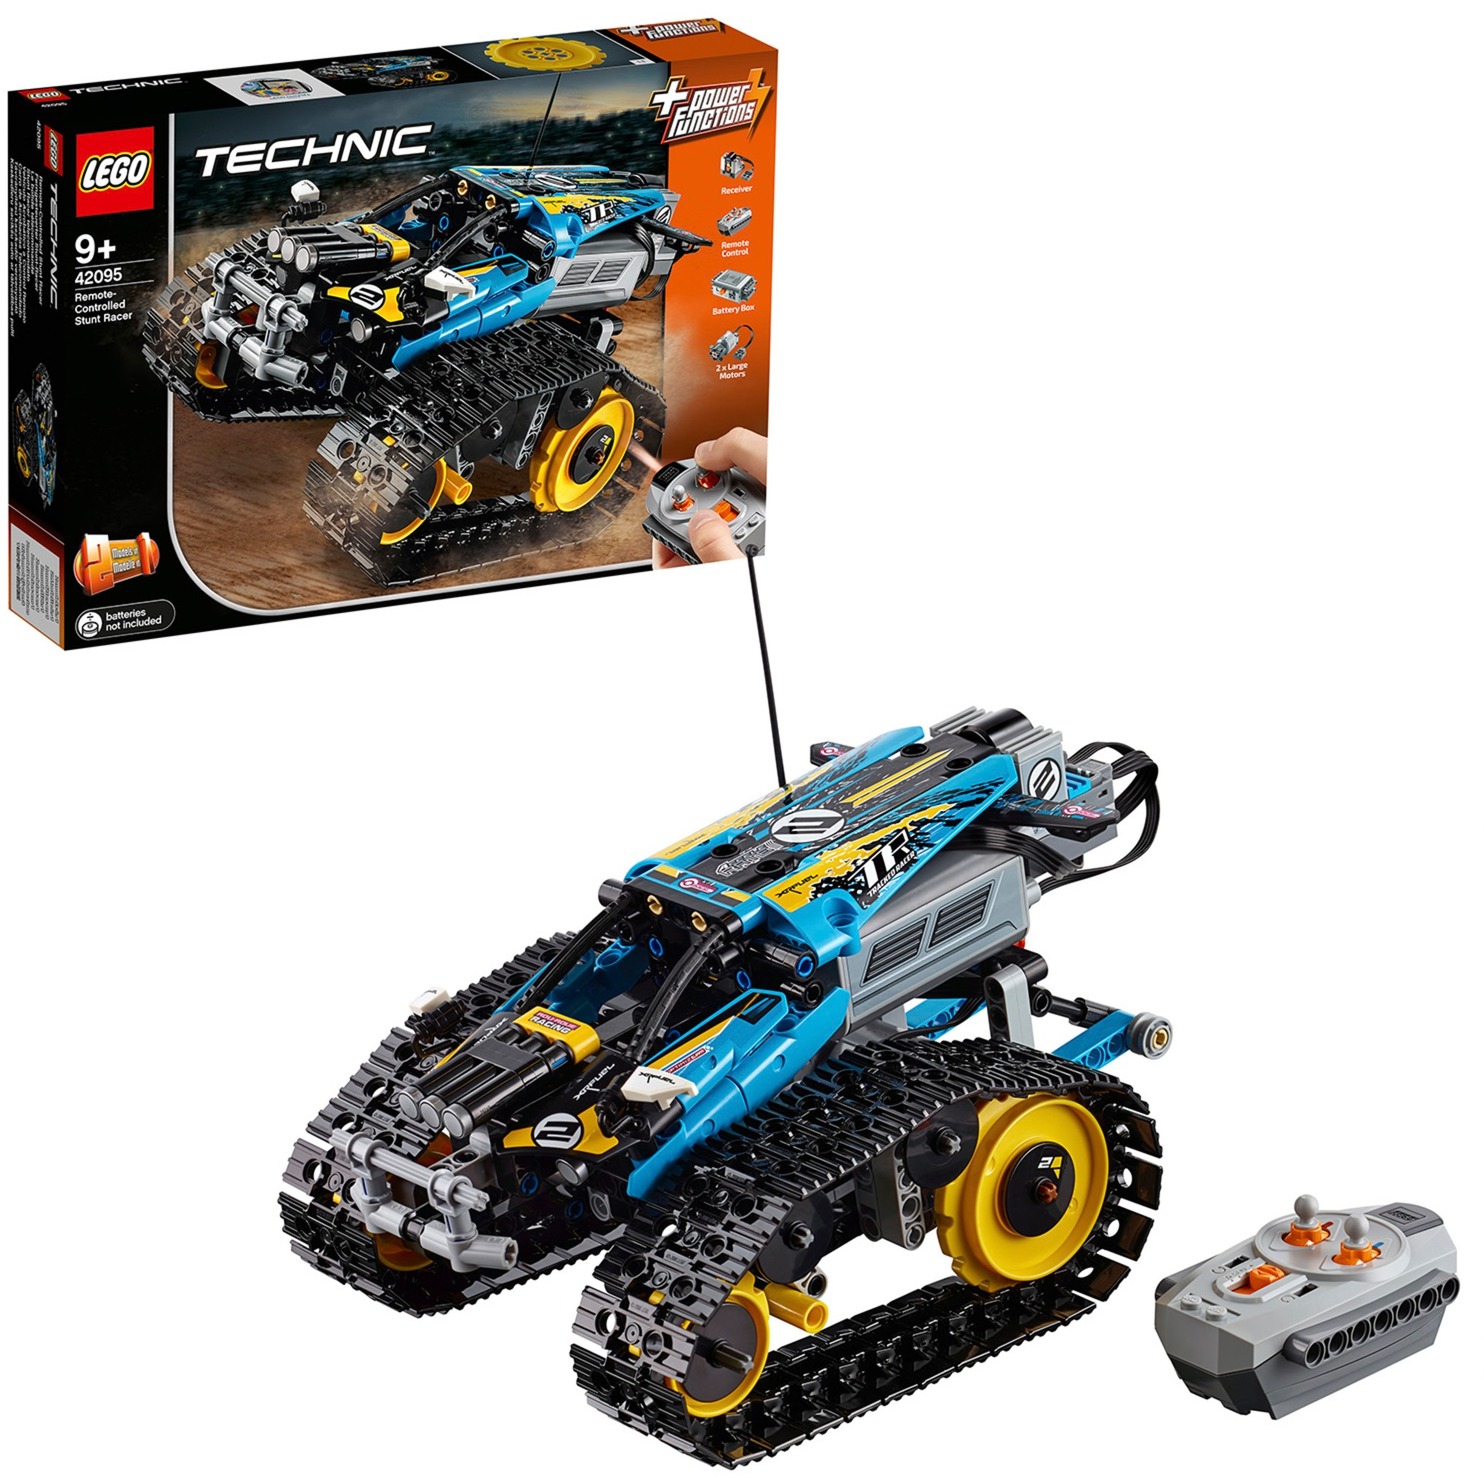 Spielzeug: Lego 42095 Technic Ferngesteuerter Stunt-Racer